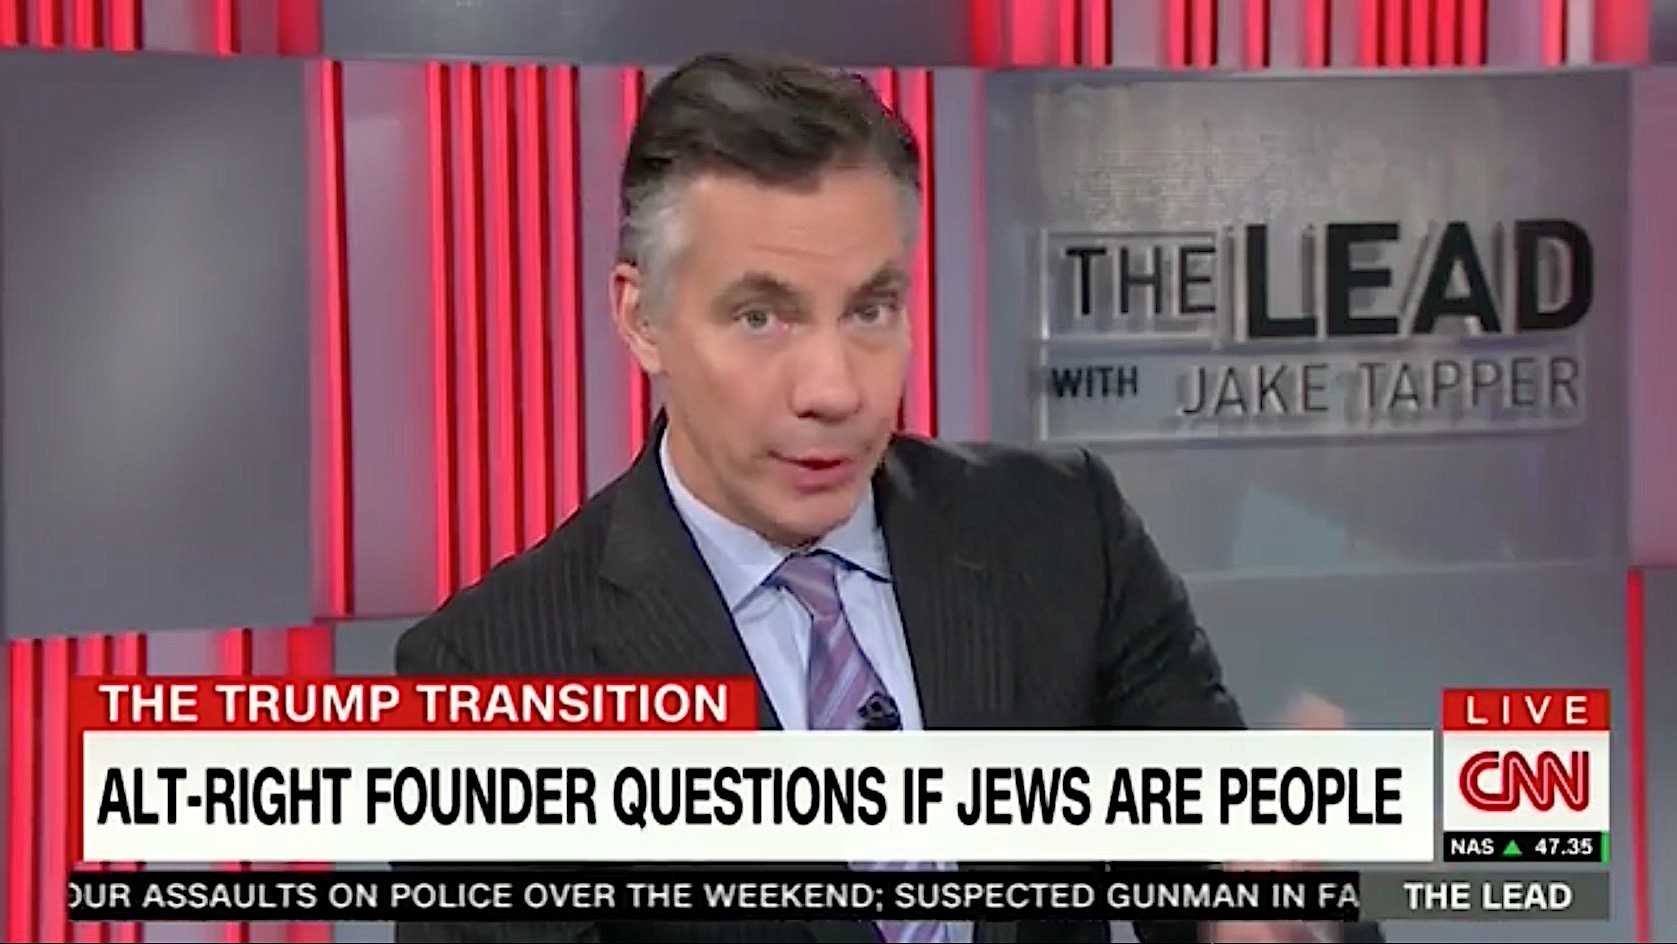 CNN ran an unfortunate chyron under a story about the alt-right